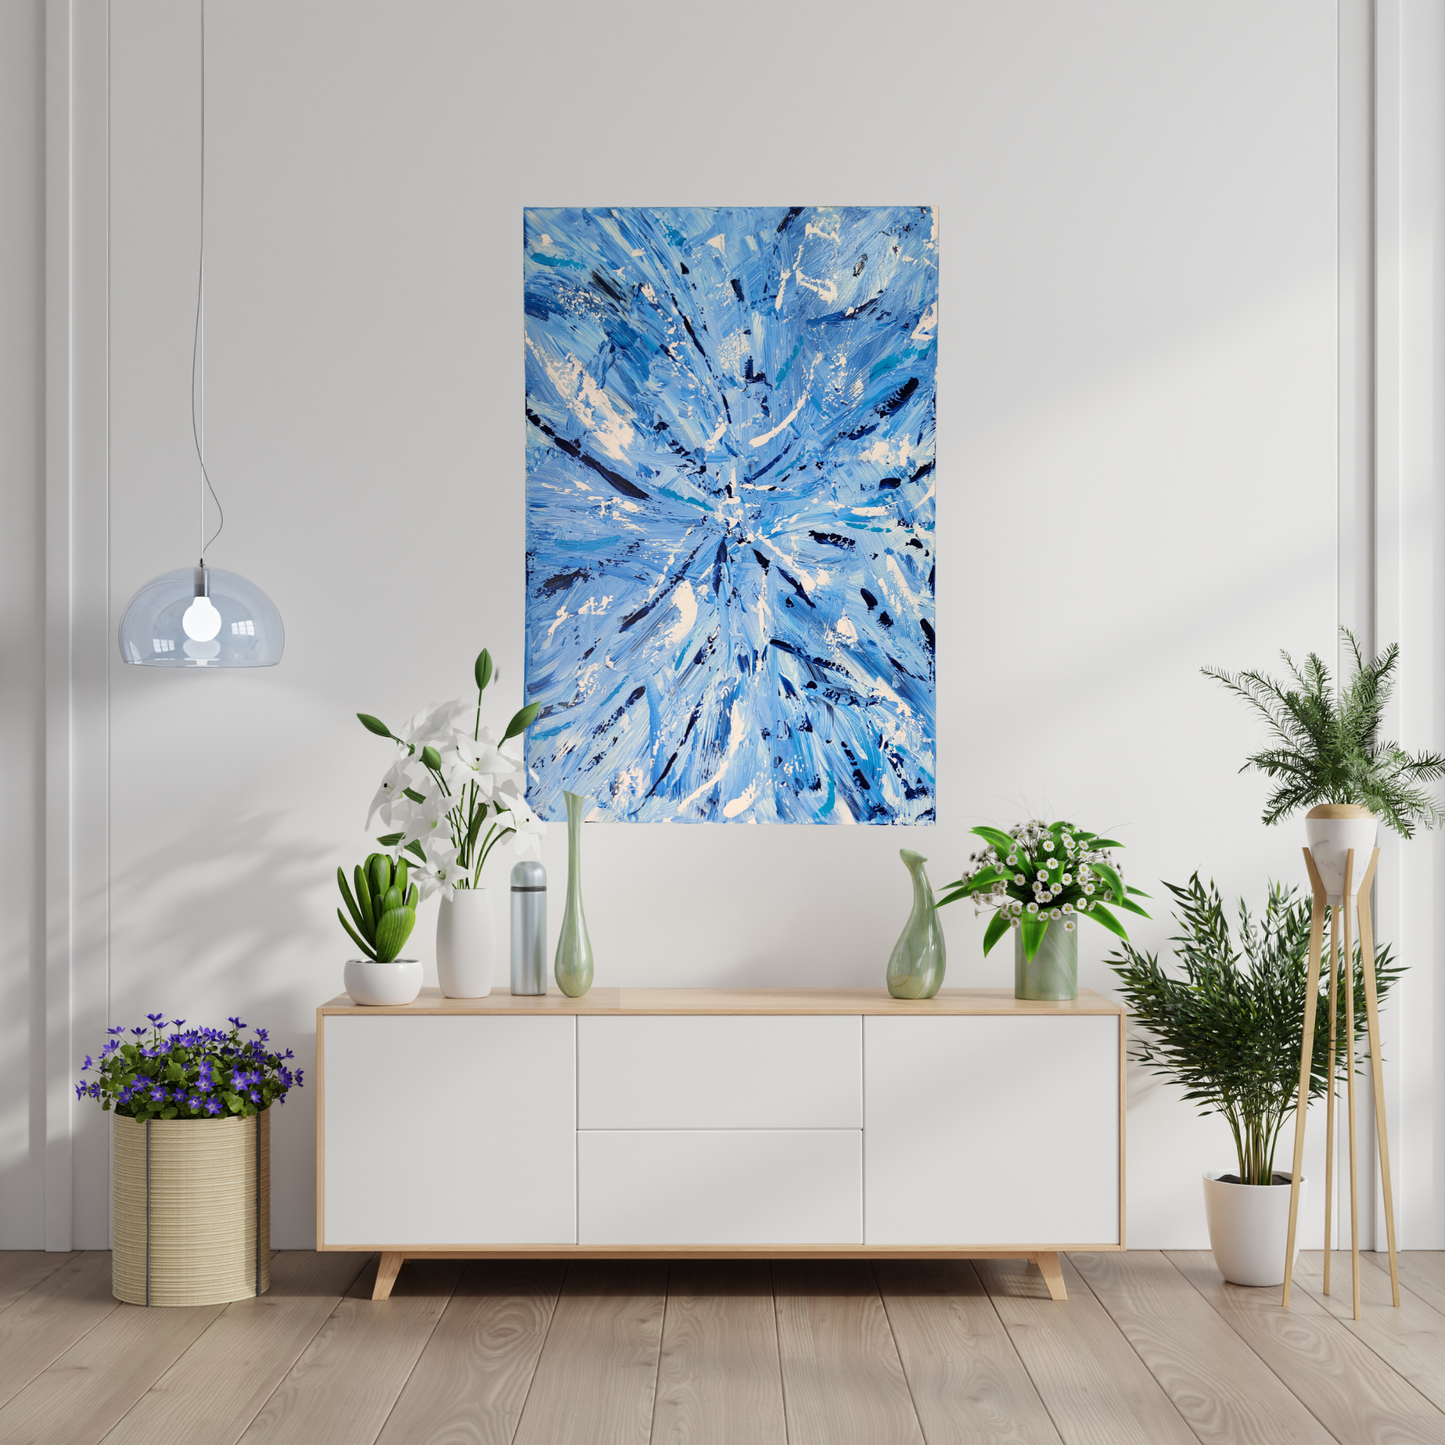 Splash of Blue Acrylic Painting on Canvas